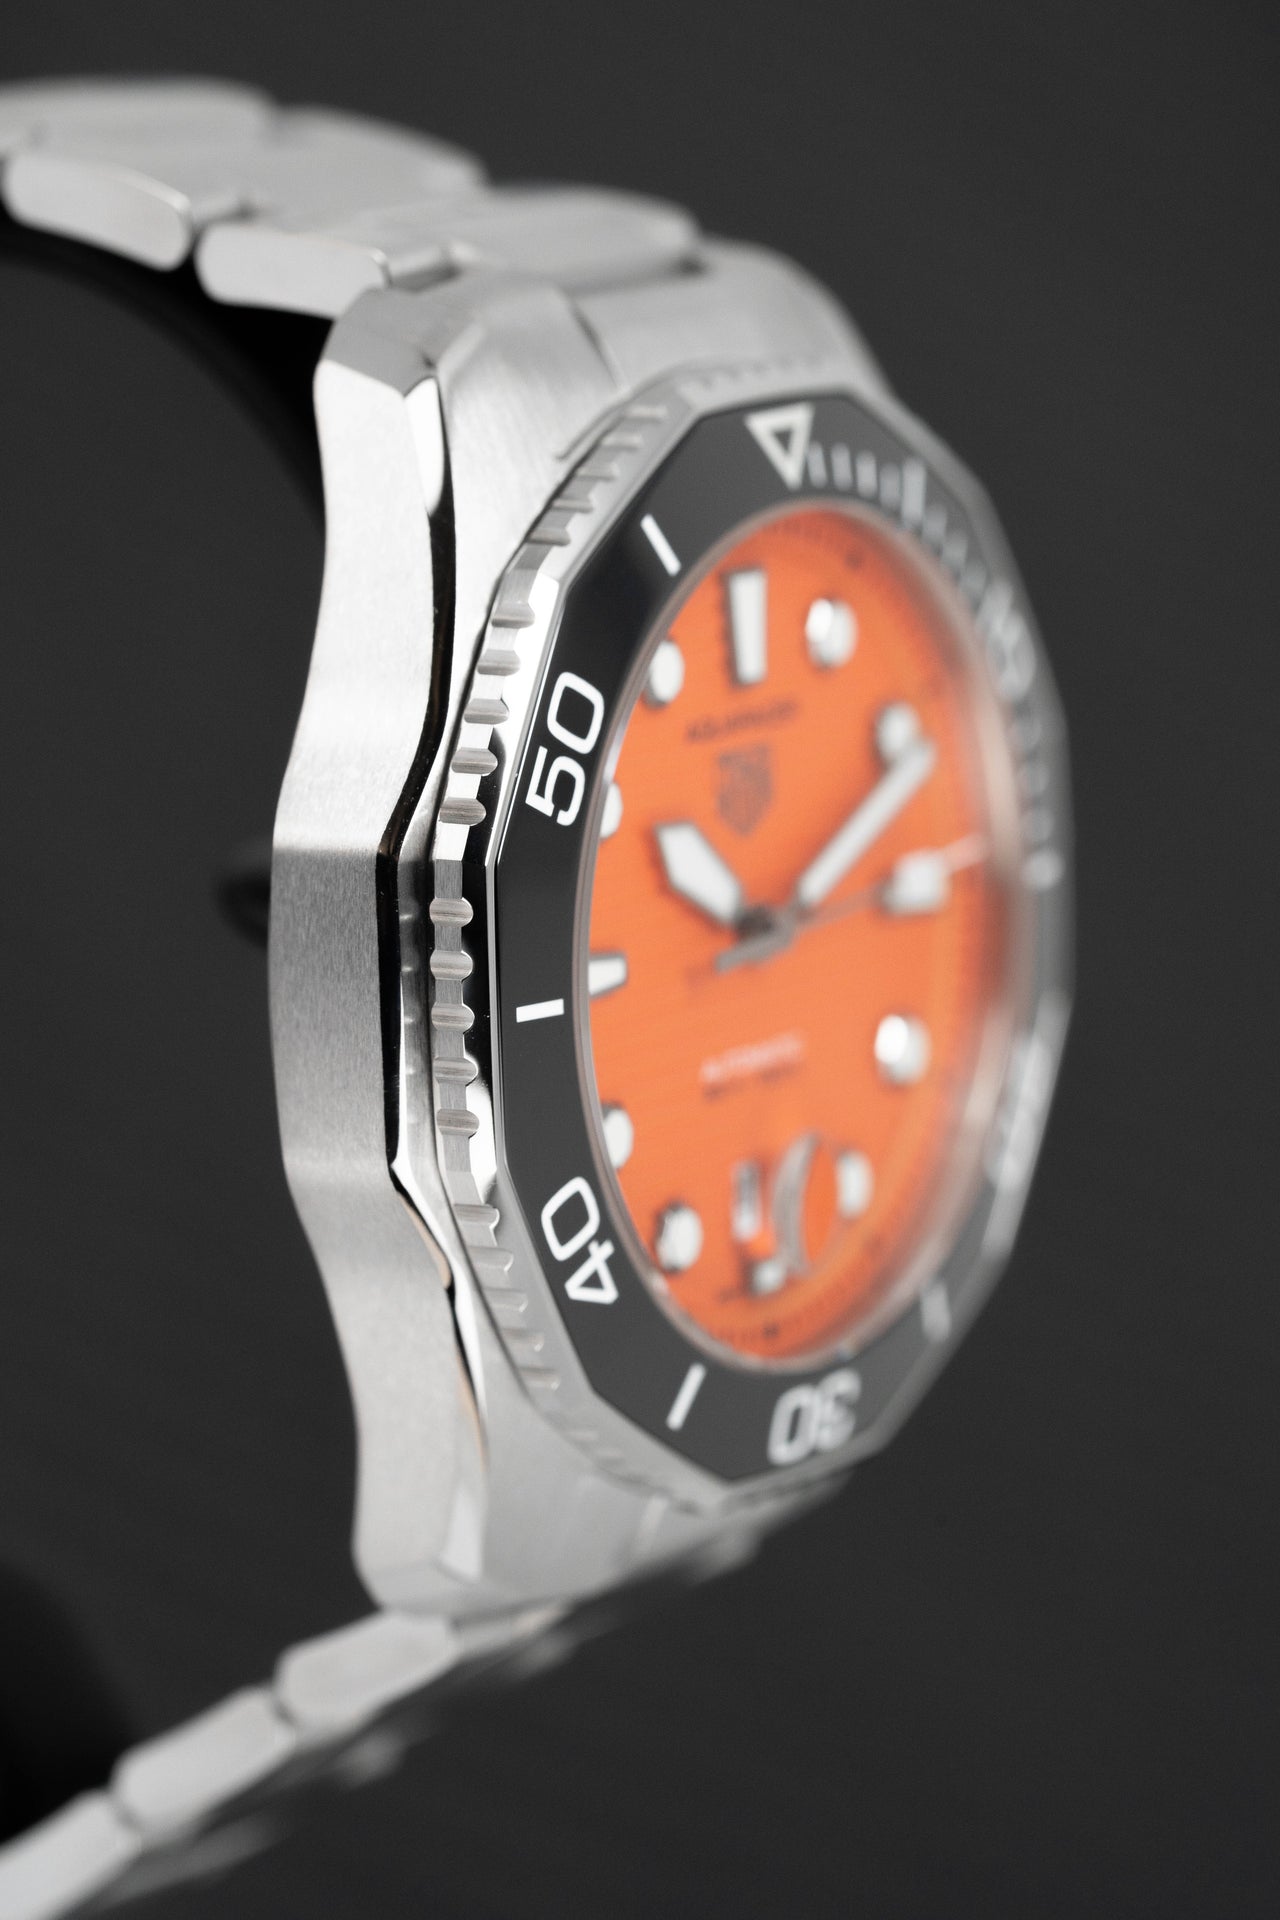 Tag Heuer Watch Automatic Aquaracer Professional 300 Diver Orange WBP201F.BA0632